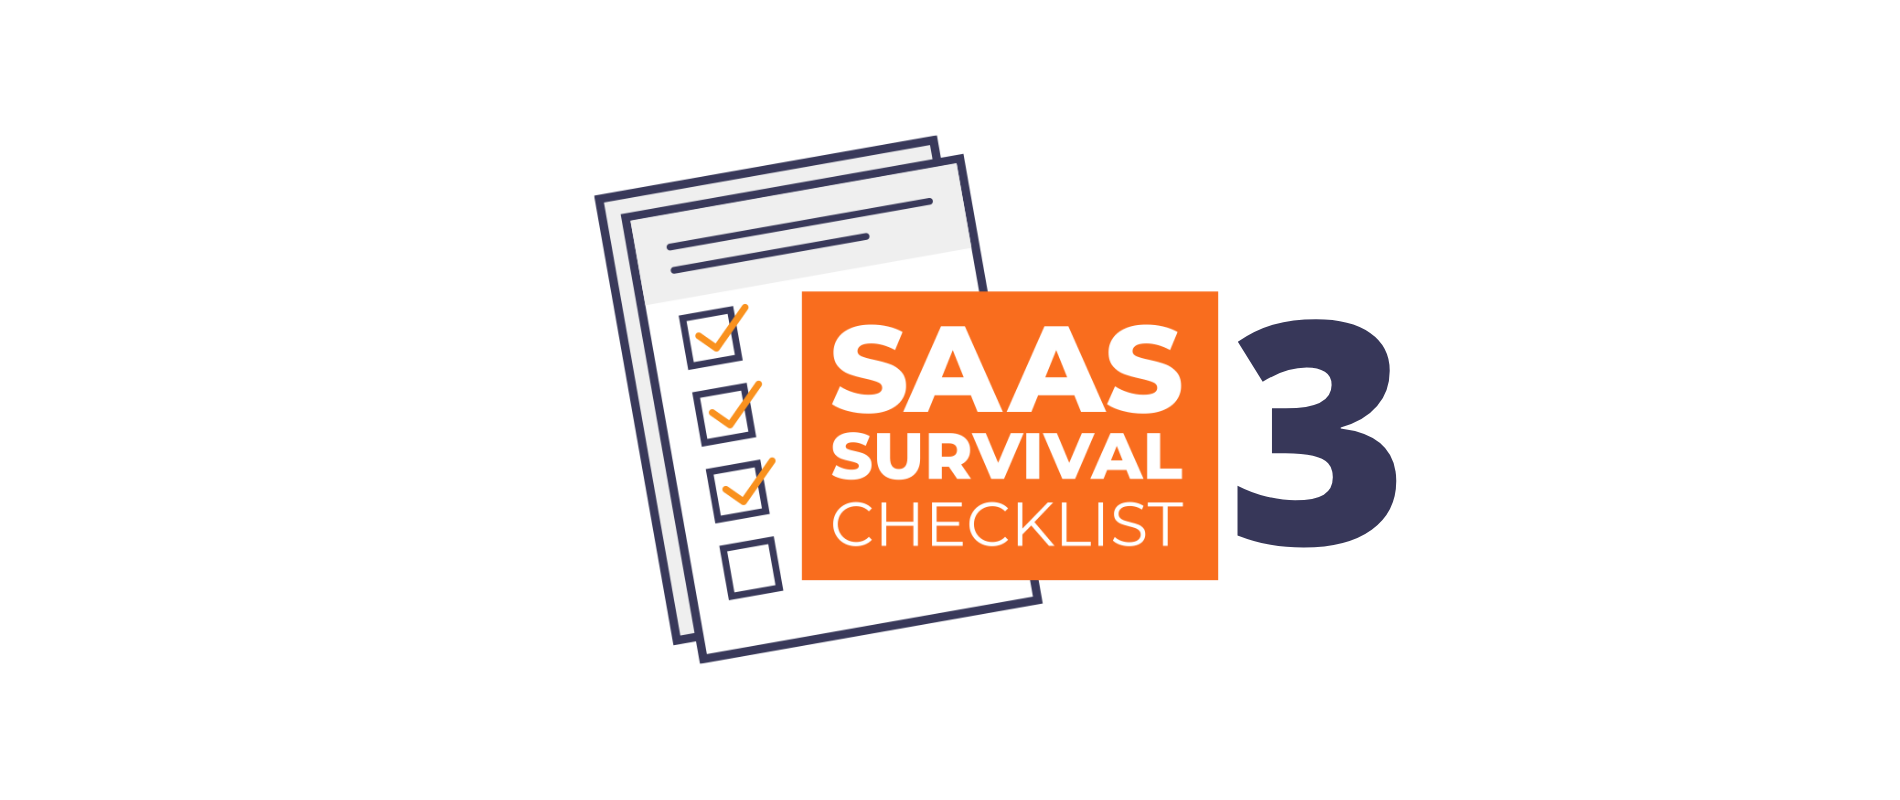 SaaS Sales and Marketing Survival Checklist - Part 3 